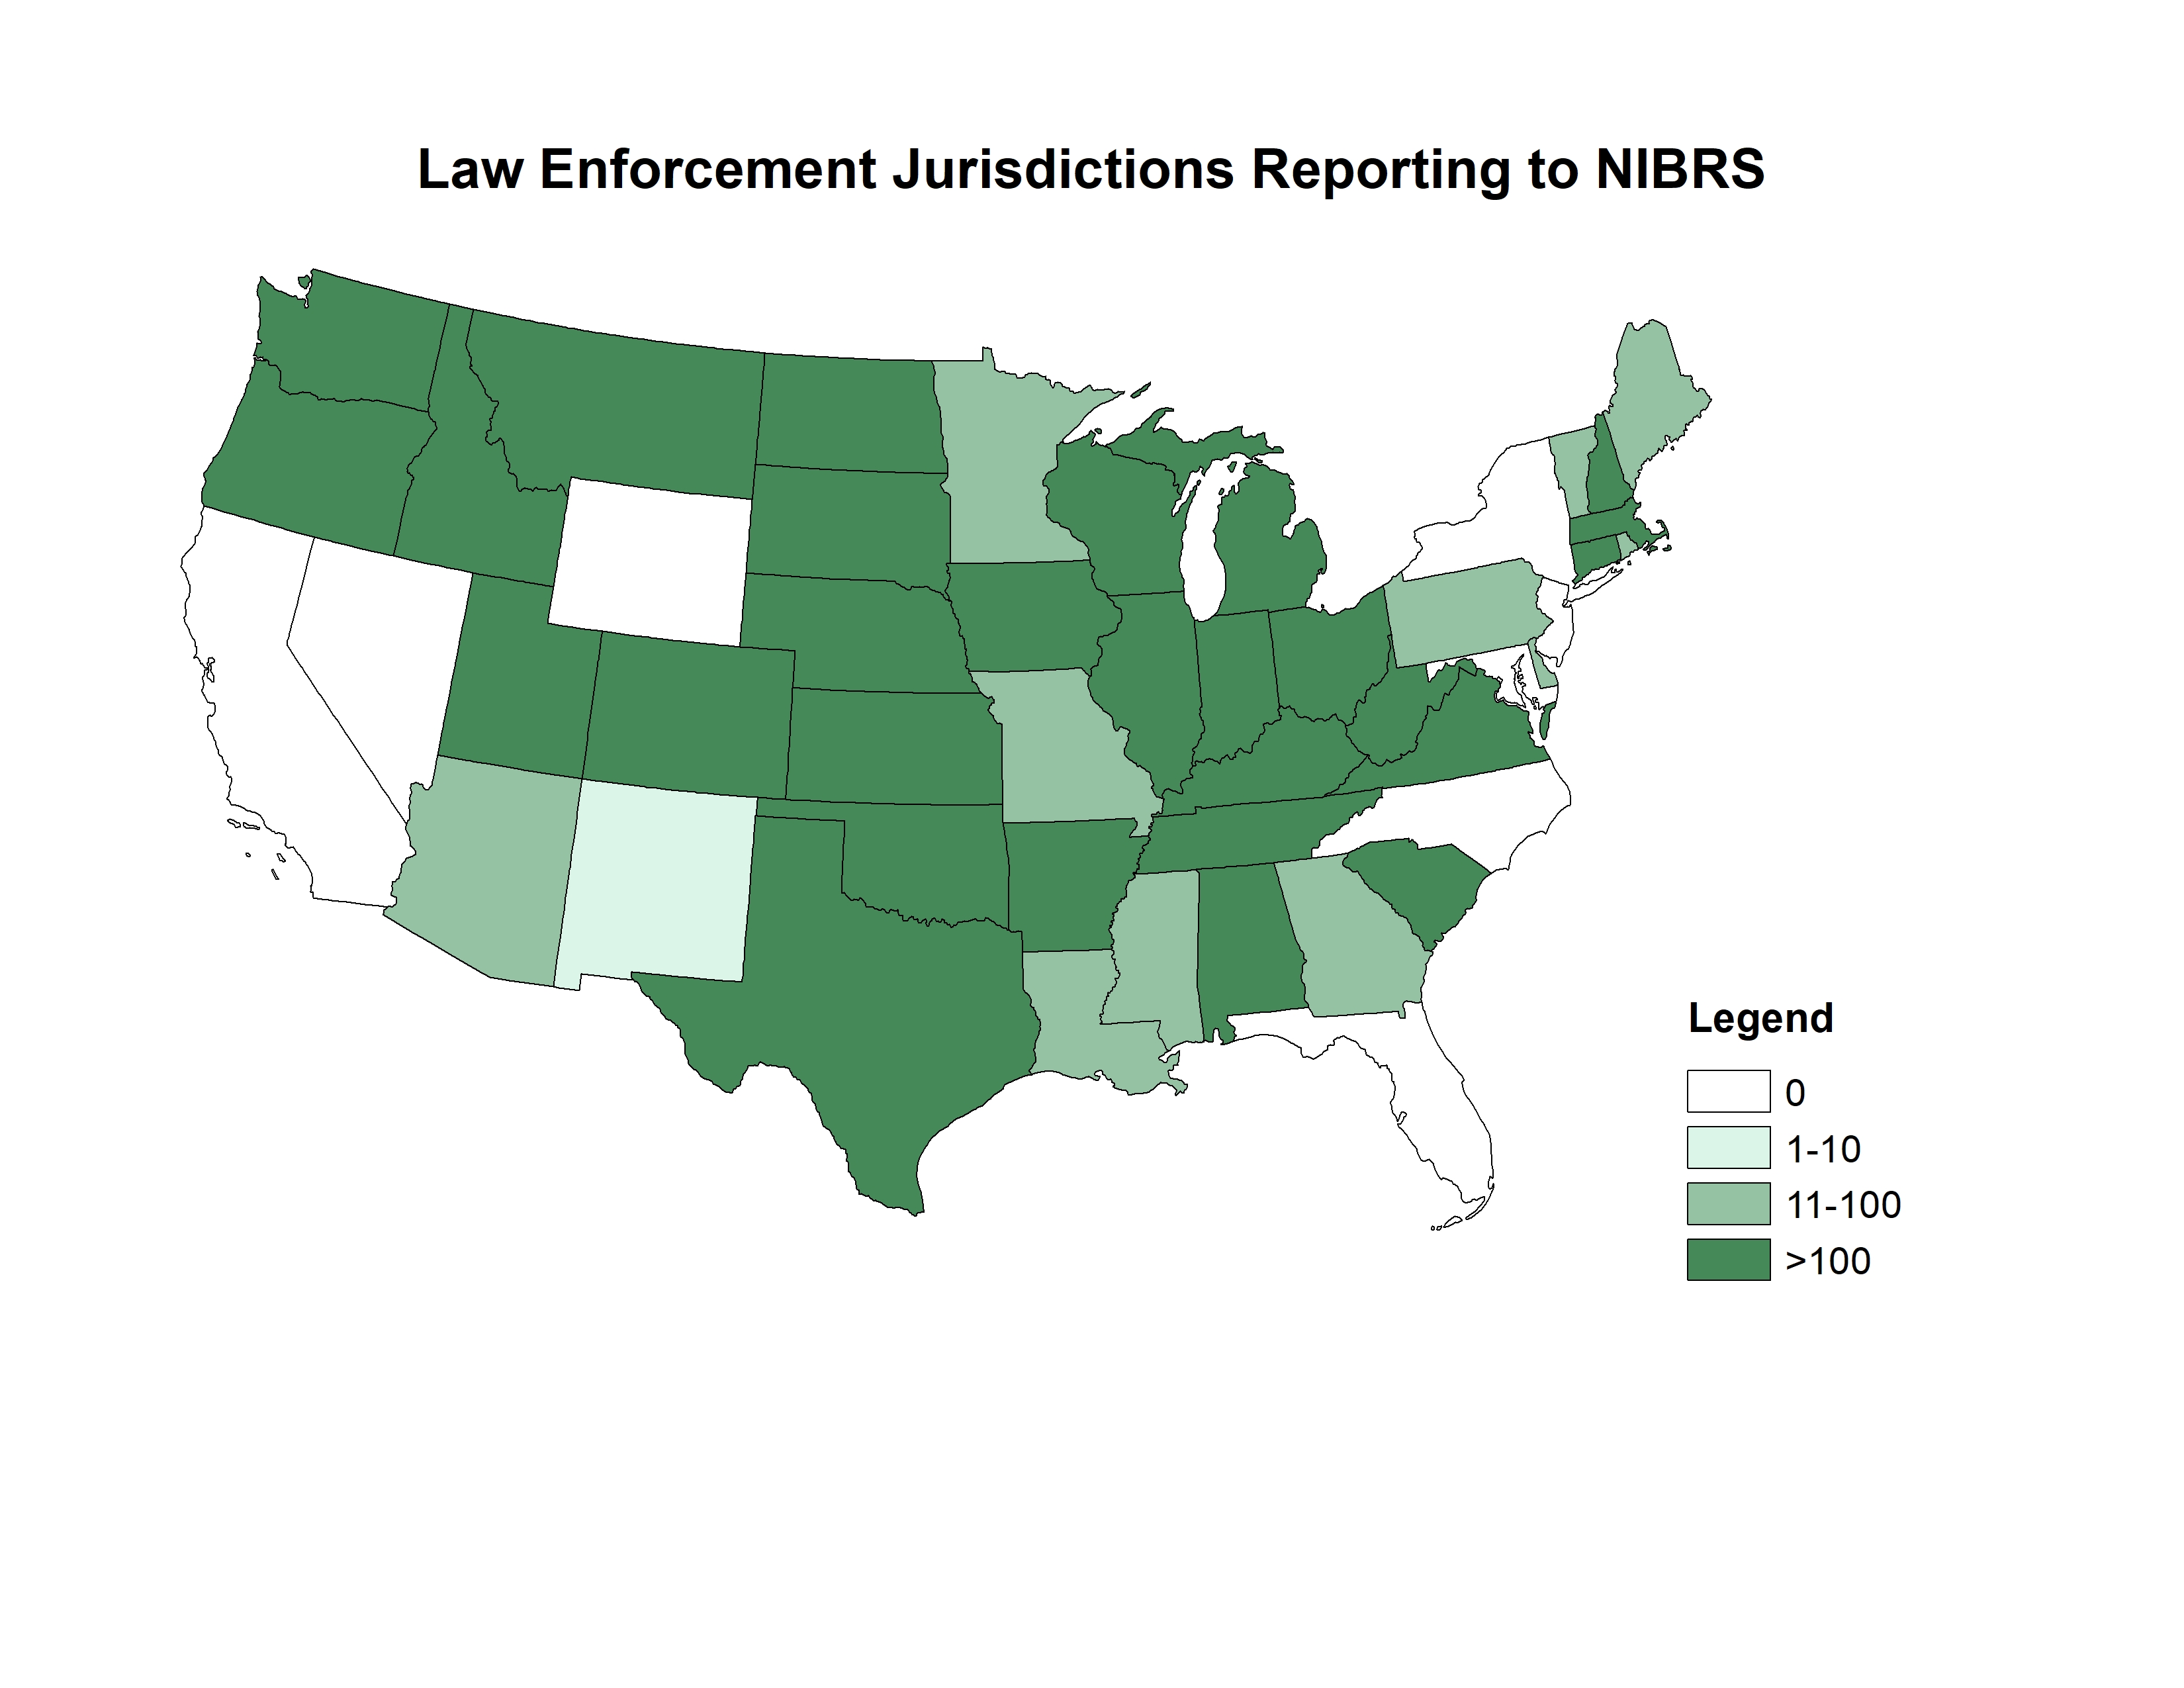 NIBRS jurisdictions